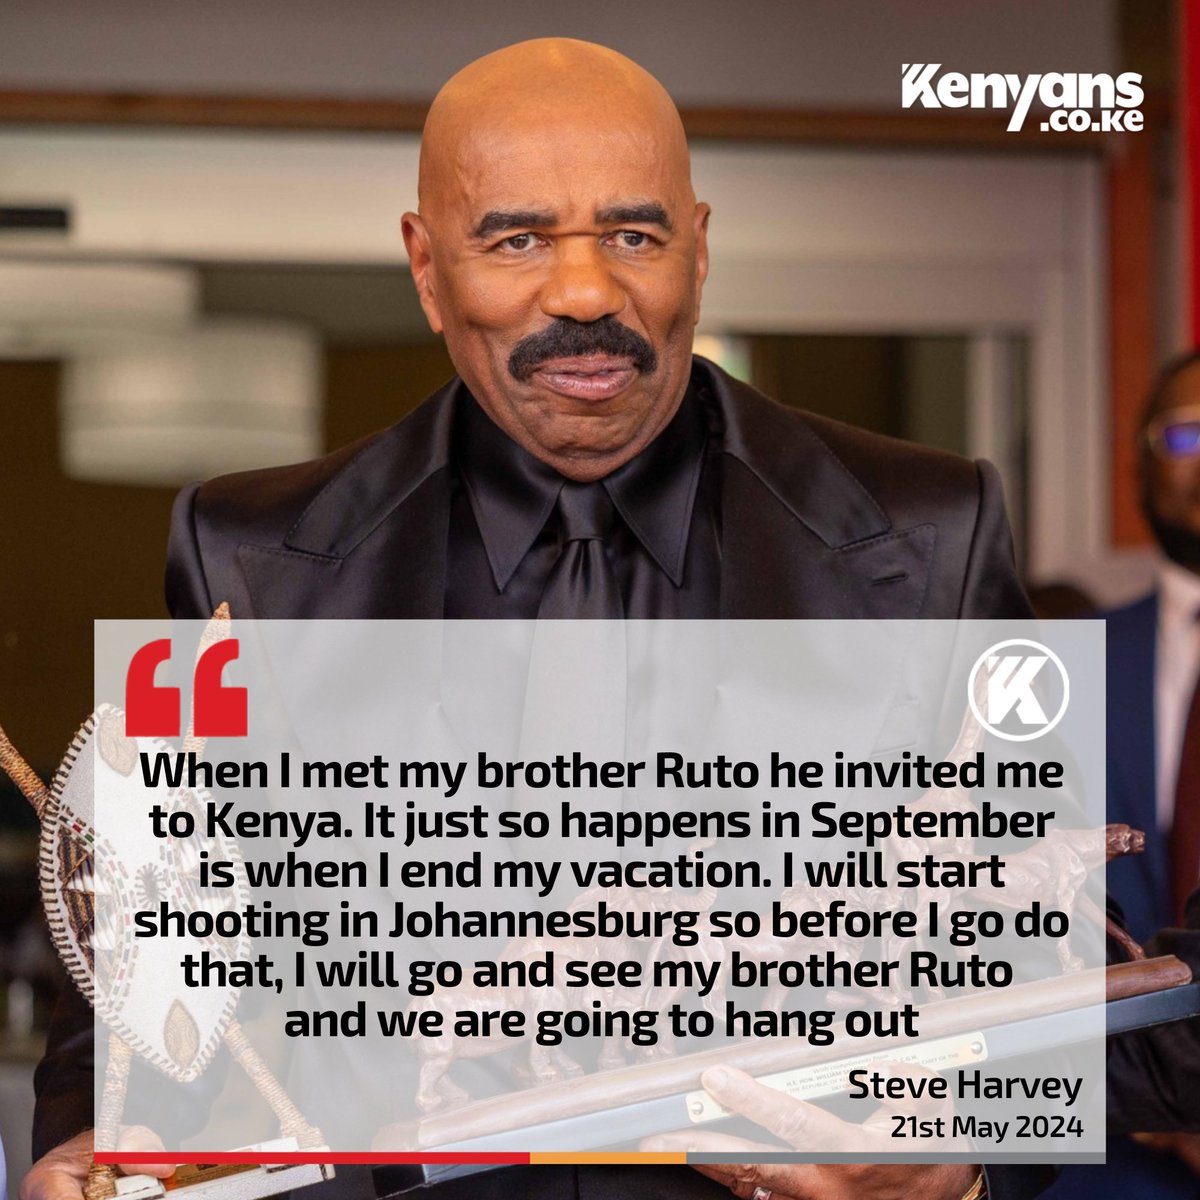 When I met my brother Ruto he invited me to Kenya - Steve Harvey